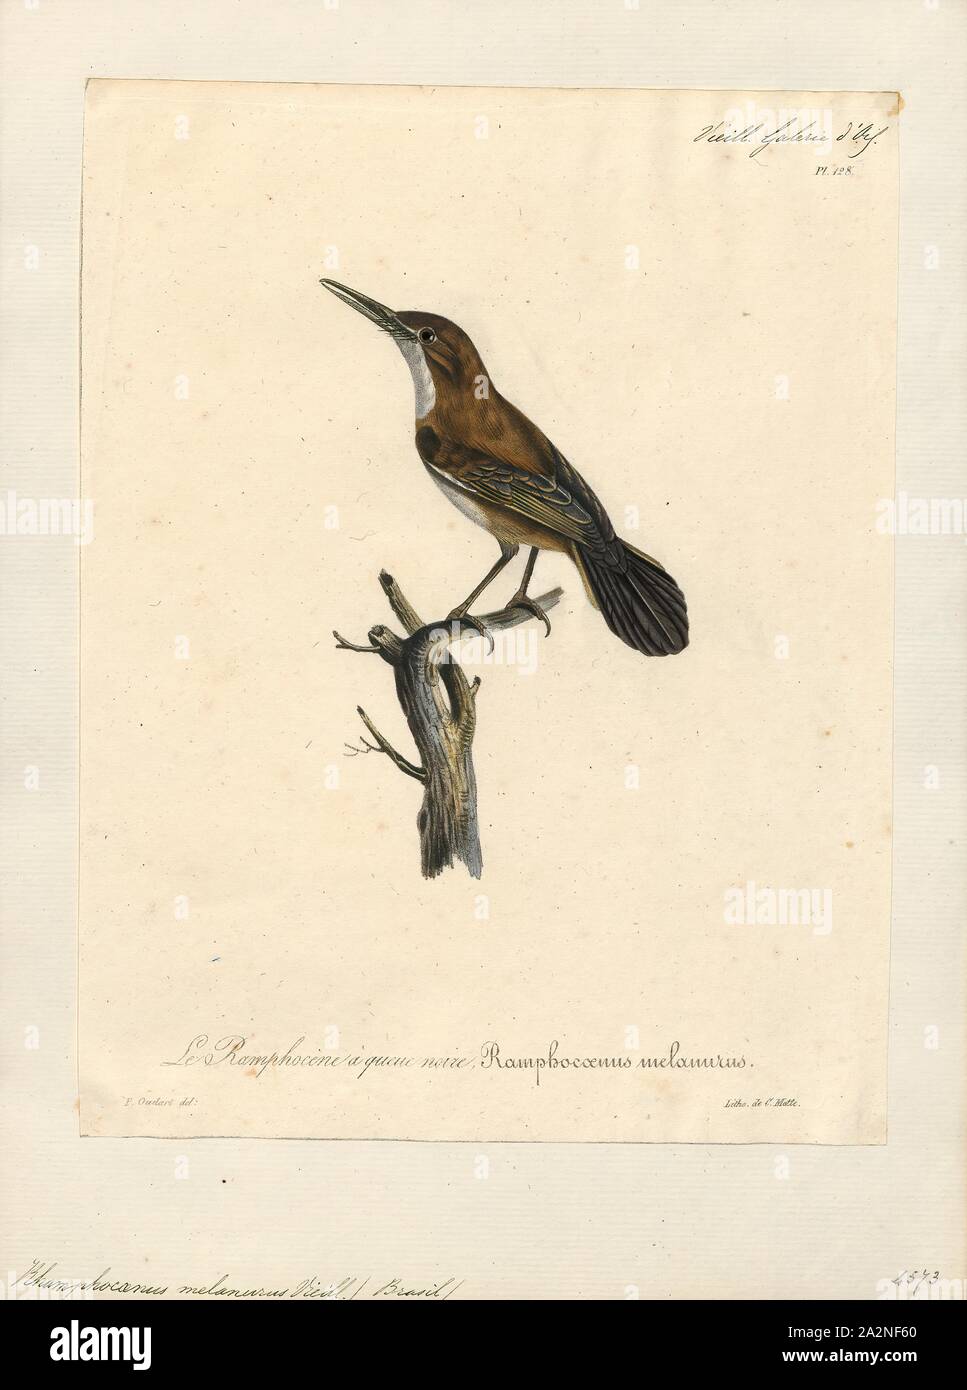 Rhamphocaenus melanurus, stampa 1825-1834 Foto Stock